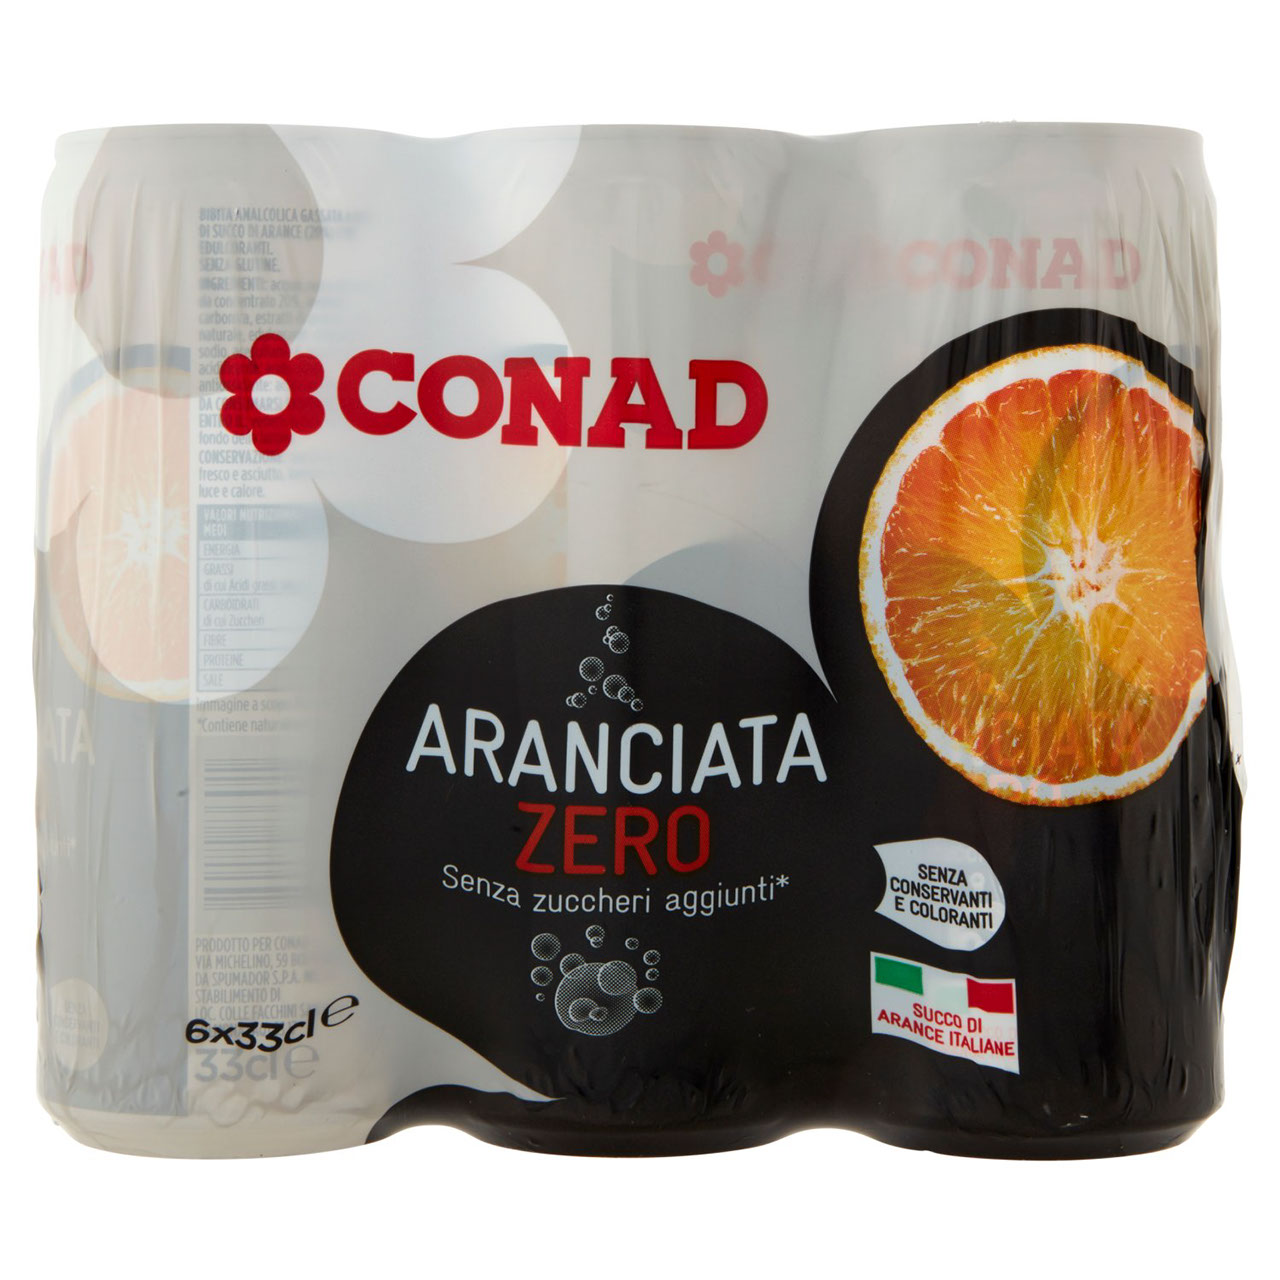 Aranciata Zero 6 x 33 cl Conad in vendita online